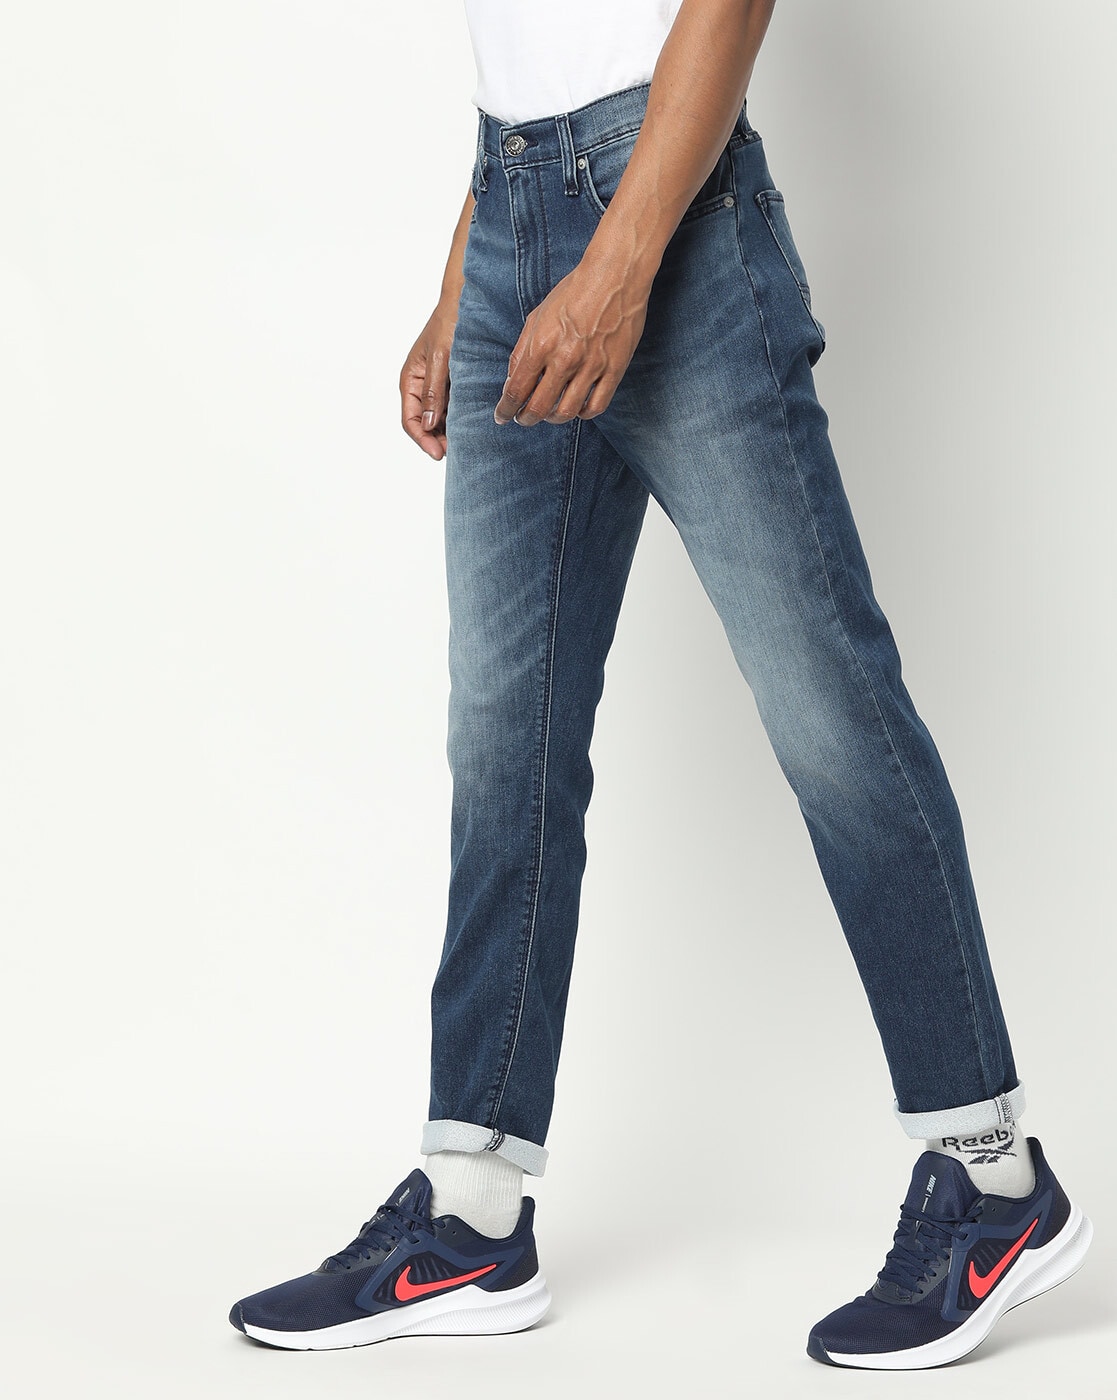 Buy Indigo Blue Jeans for Men by DENIZEN FROM LEVIS Online 